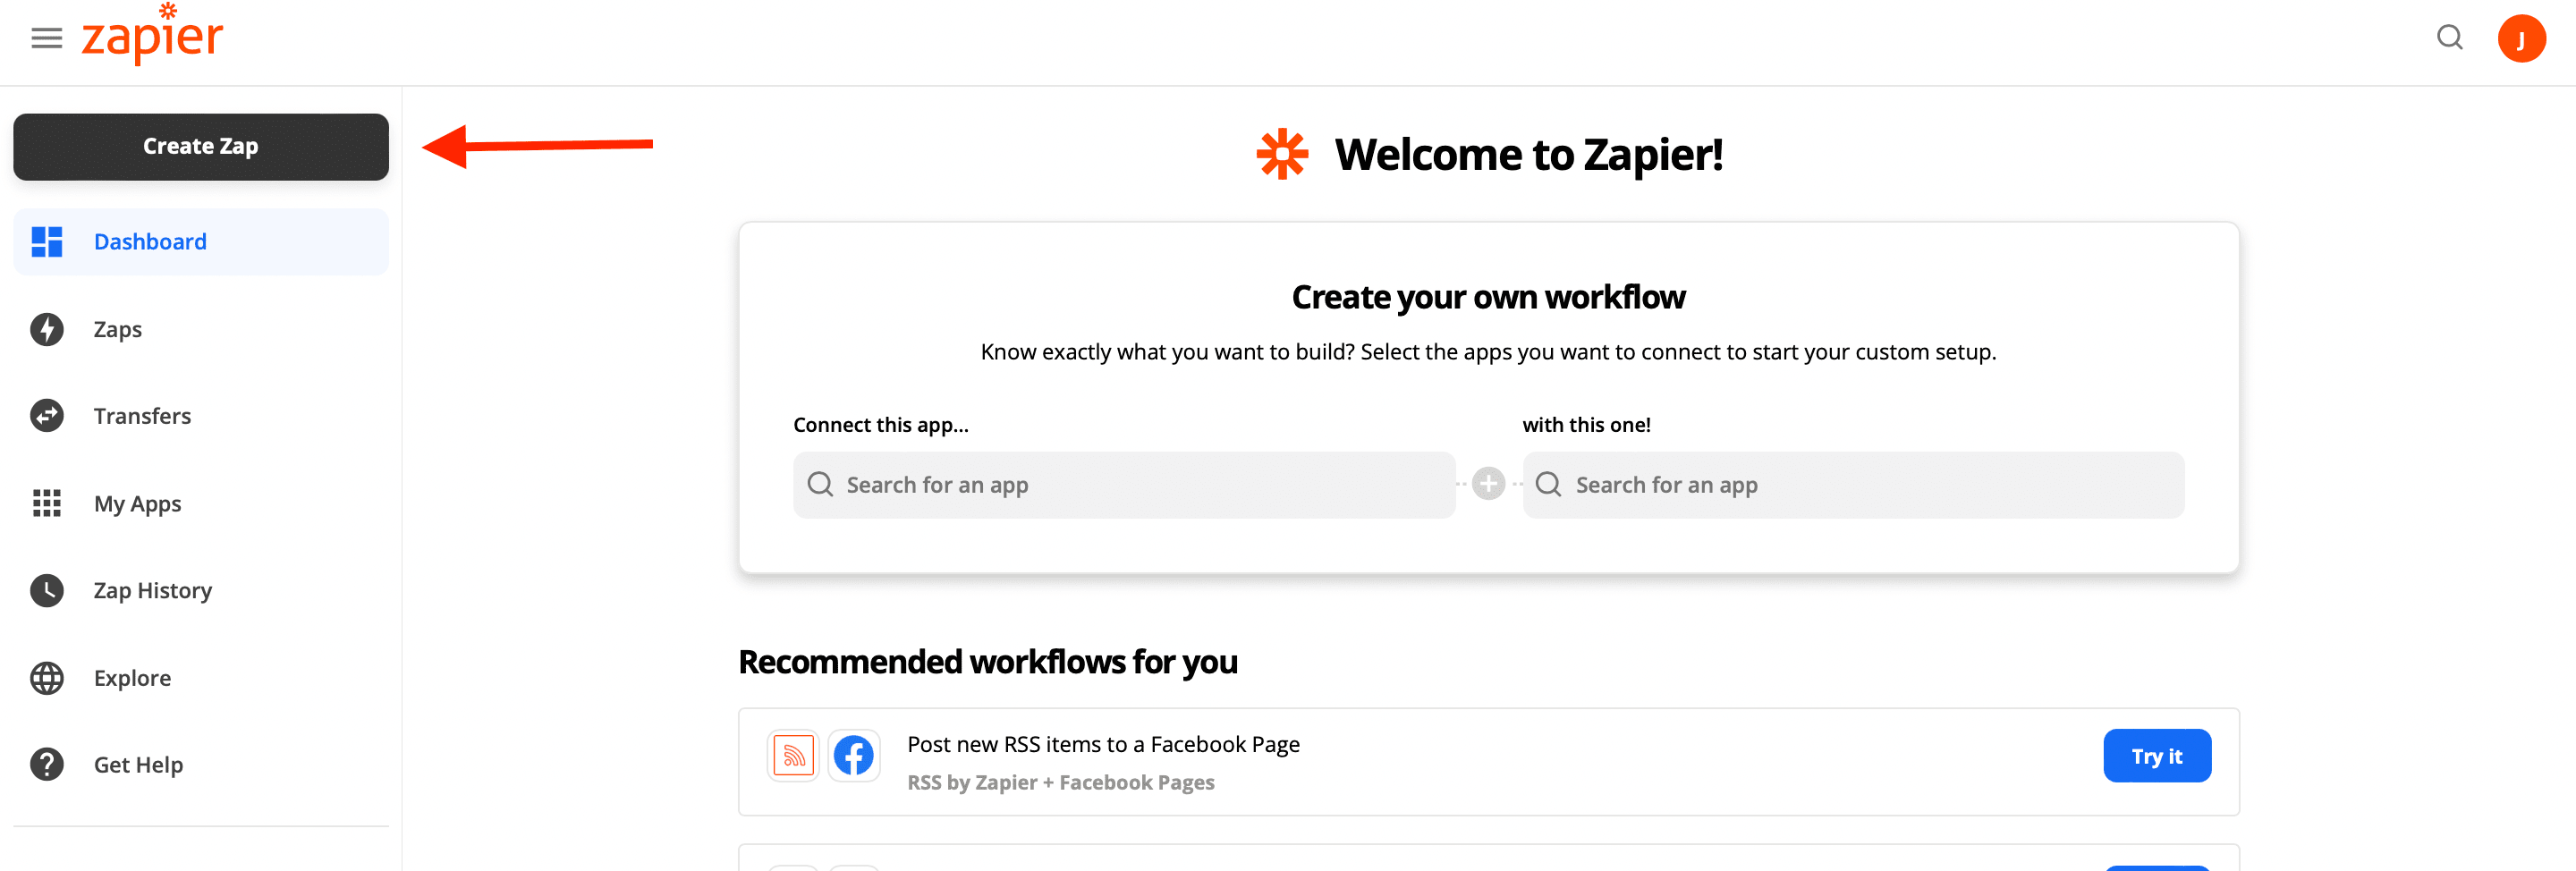 Step by step tutorial of Zapier screenshot